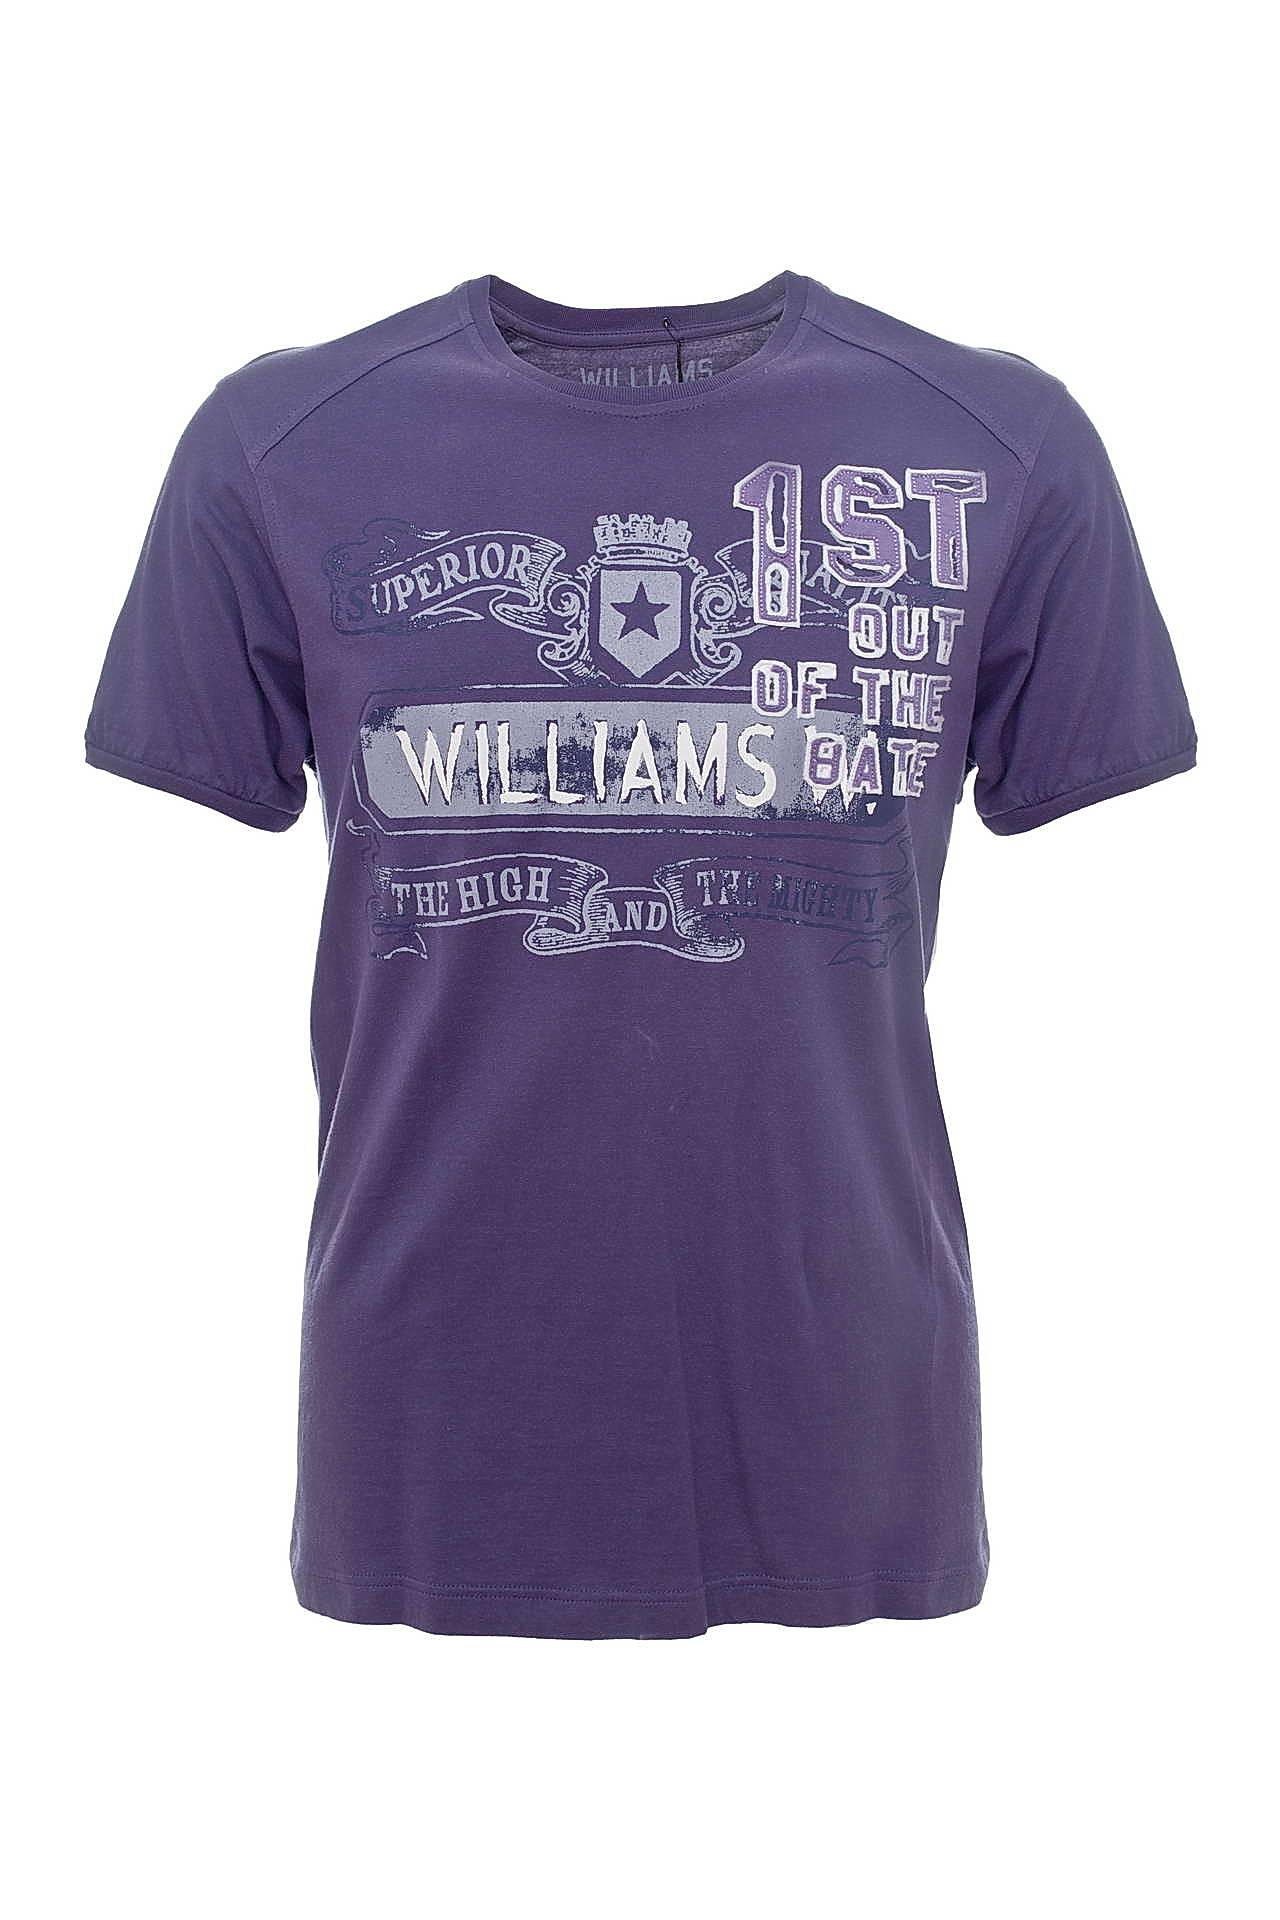 Одежда мужская Футболка WILLIAMS WILSON (1STW/16.2). Купить за 5450 руб.